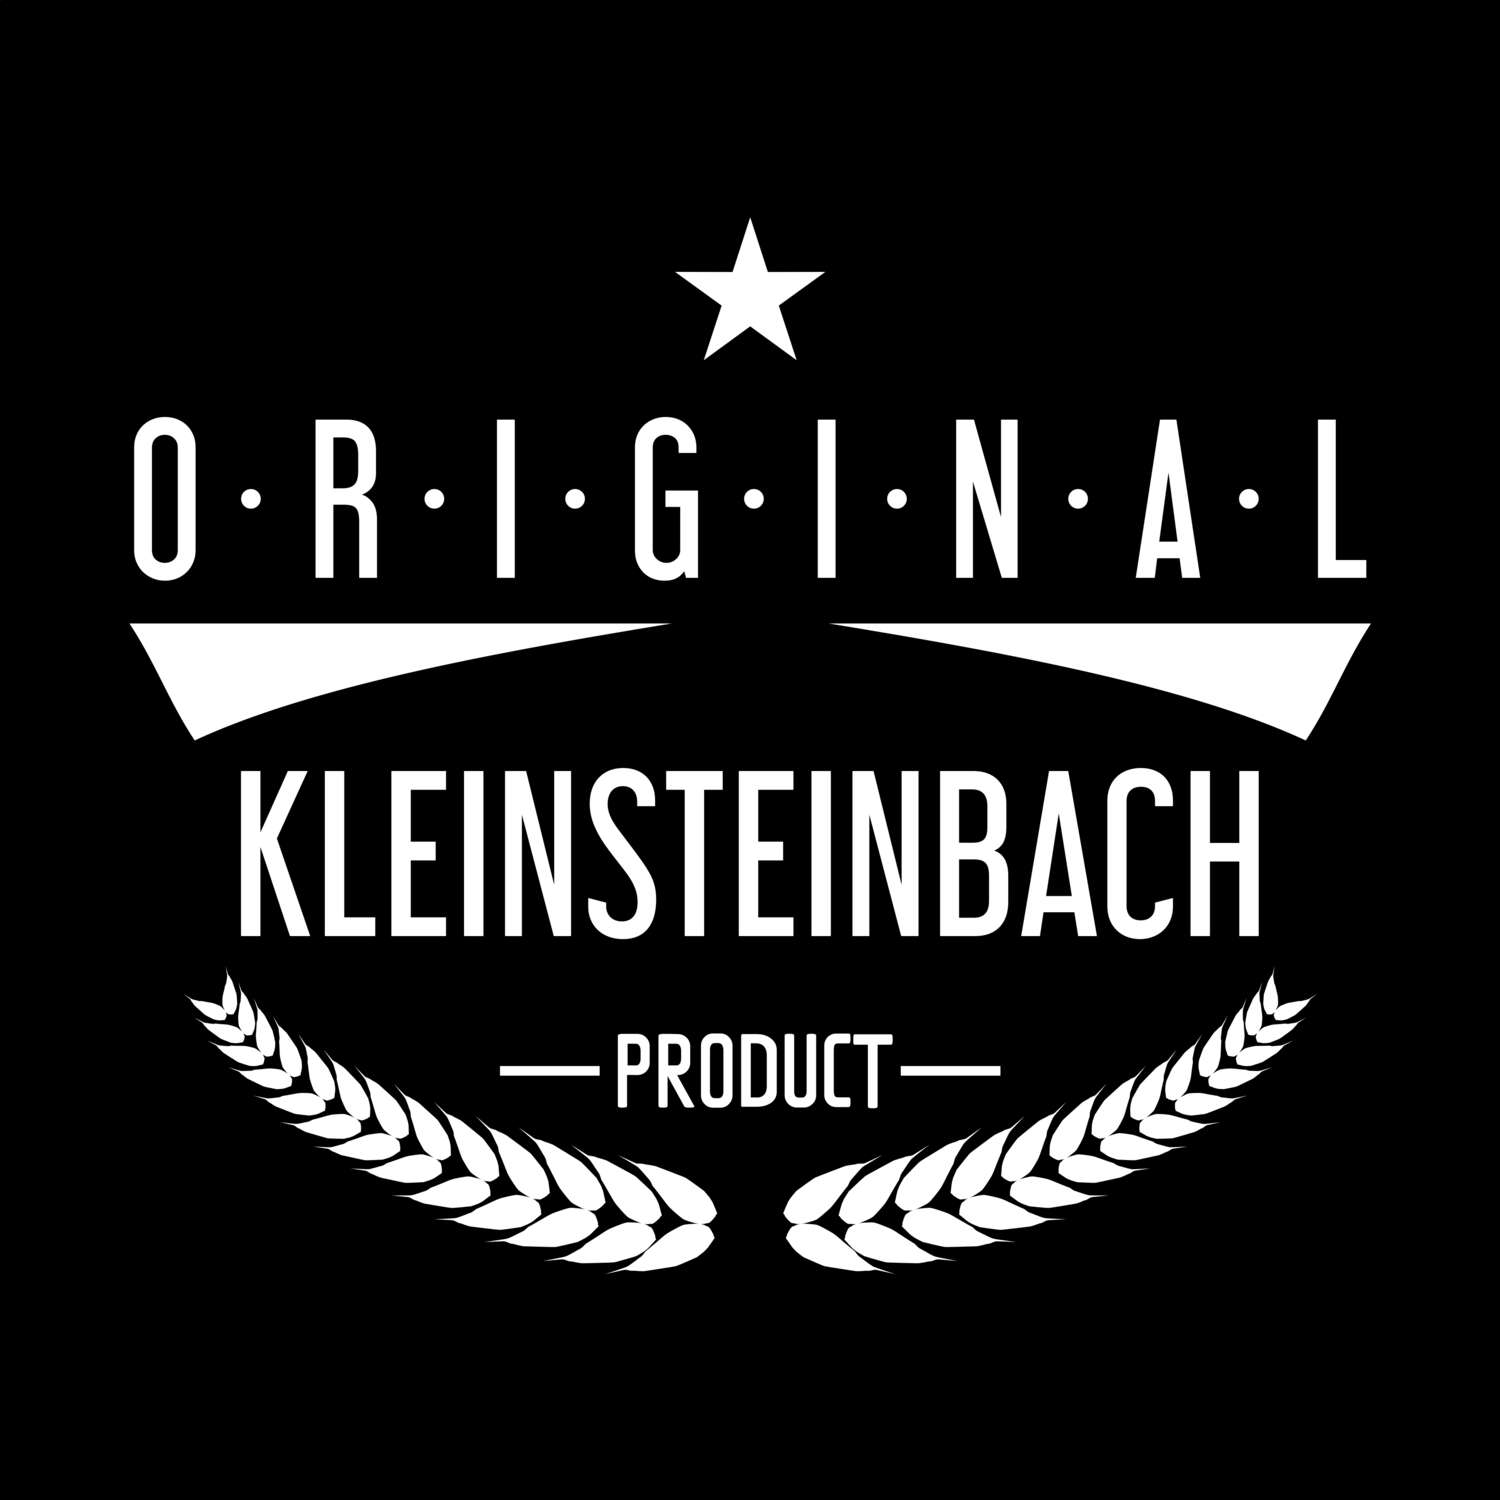 Kleinsteinbach T-Shirt »Original Product«